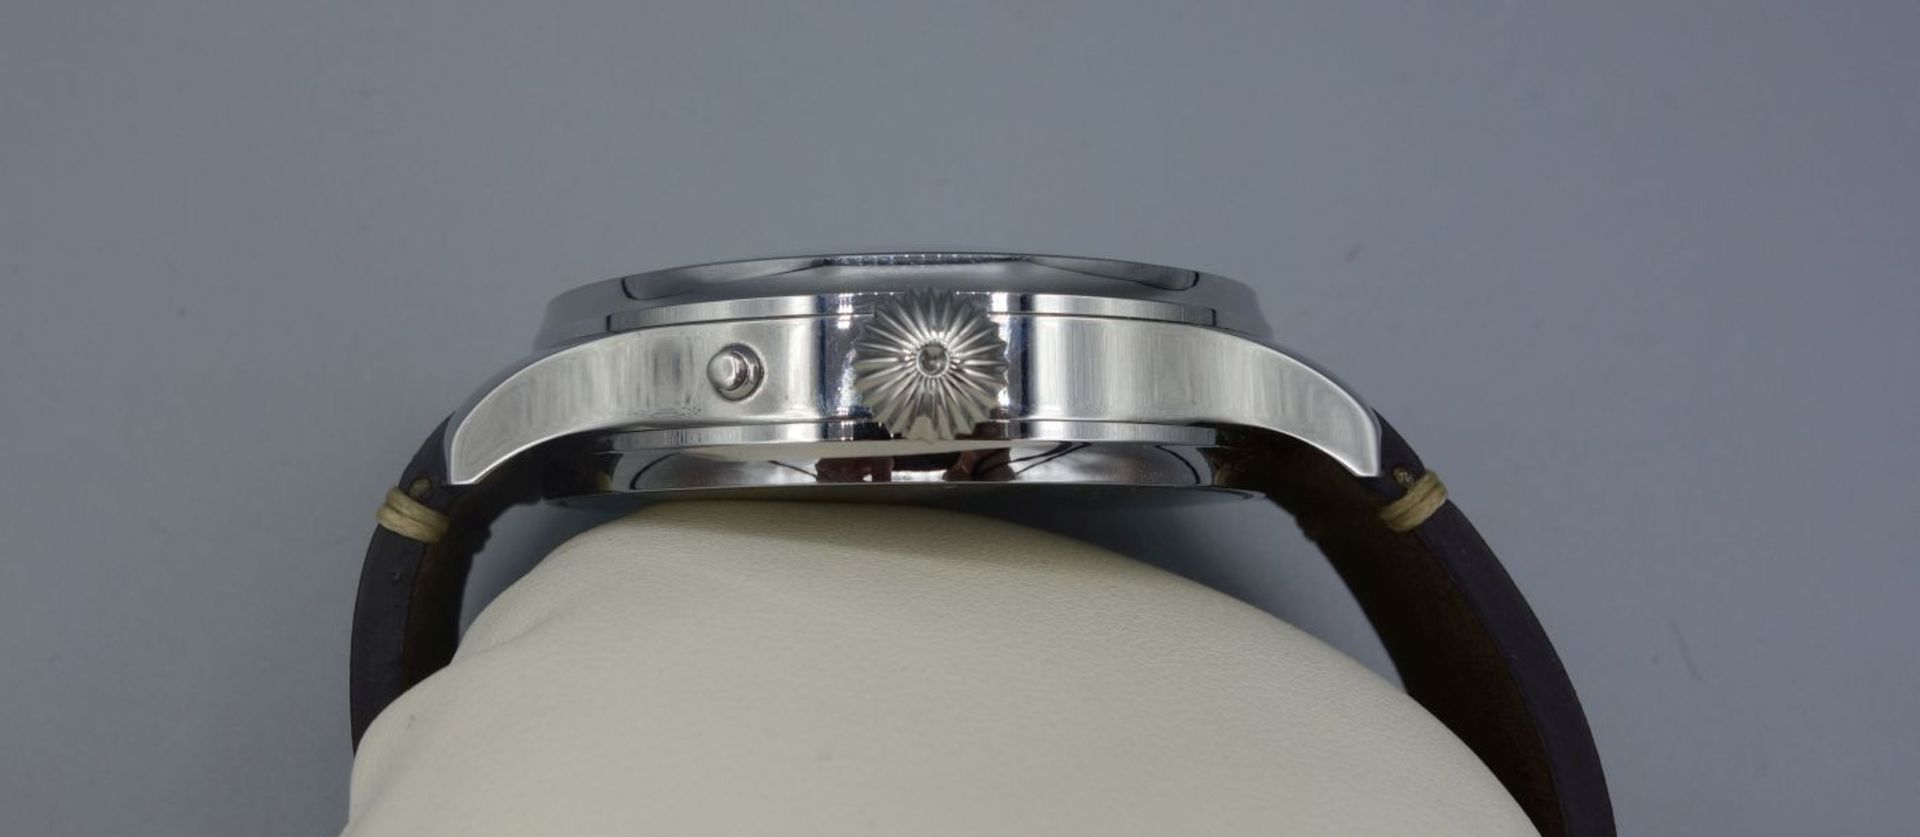 IWC - FLIEGERUHR (MARIAGE) / ARMBANDUHR / wristwatch, IWC - International Watch Co. Ltd / - Image 3 of 5